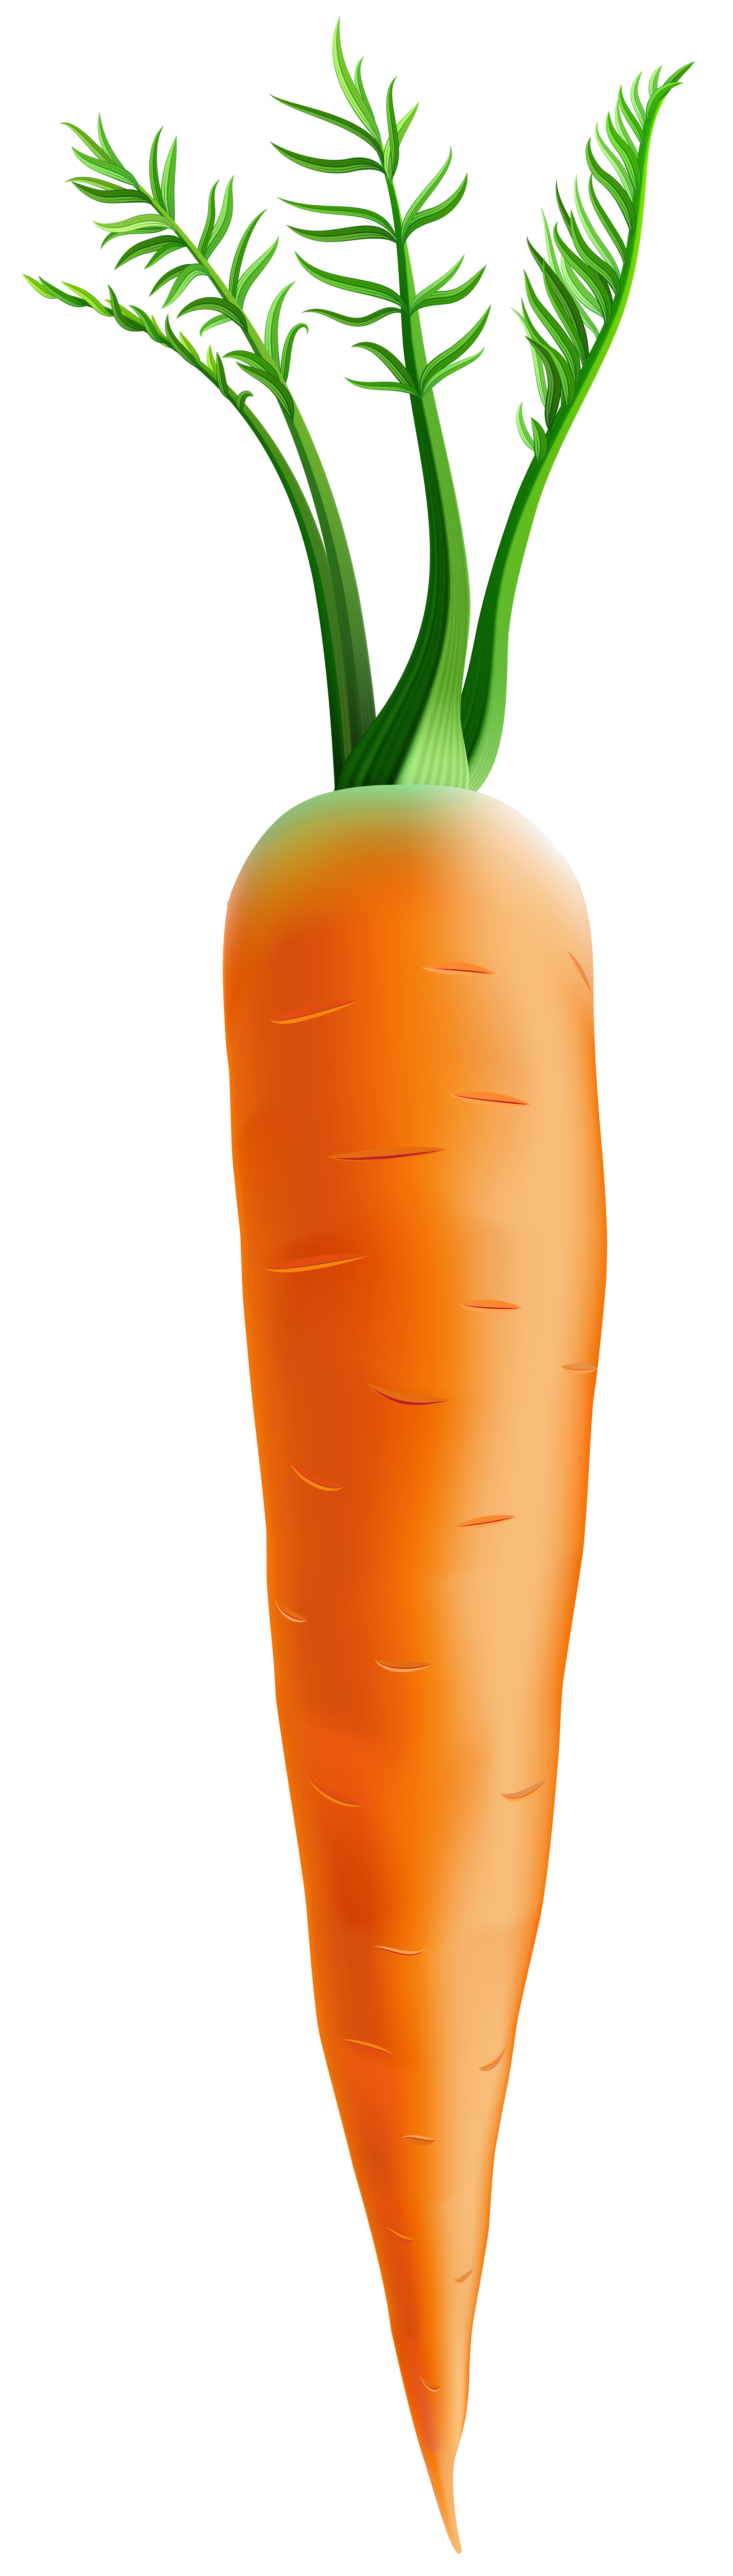 Clipart vegetables carrot. Png clip art image